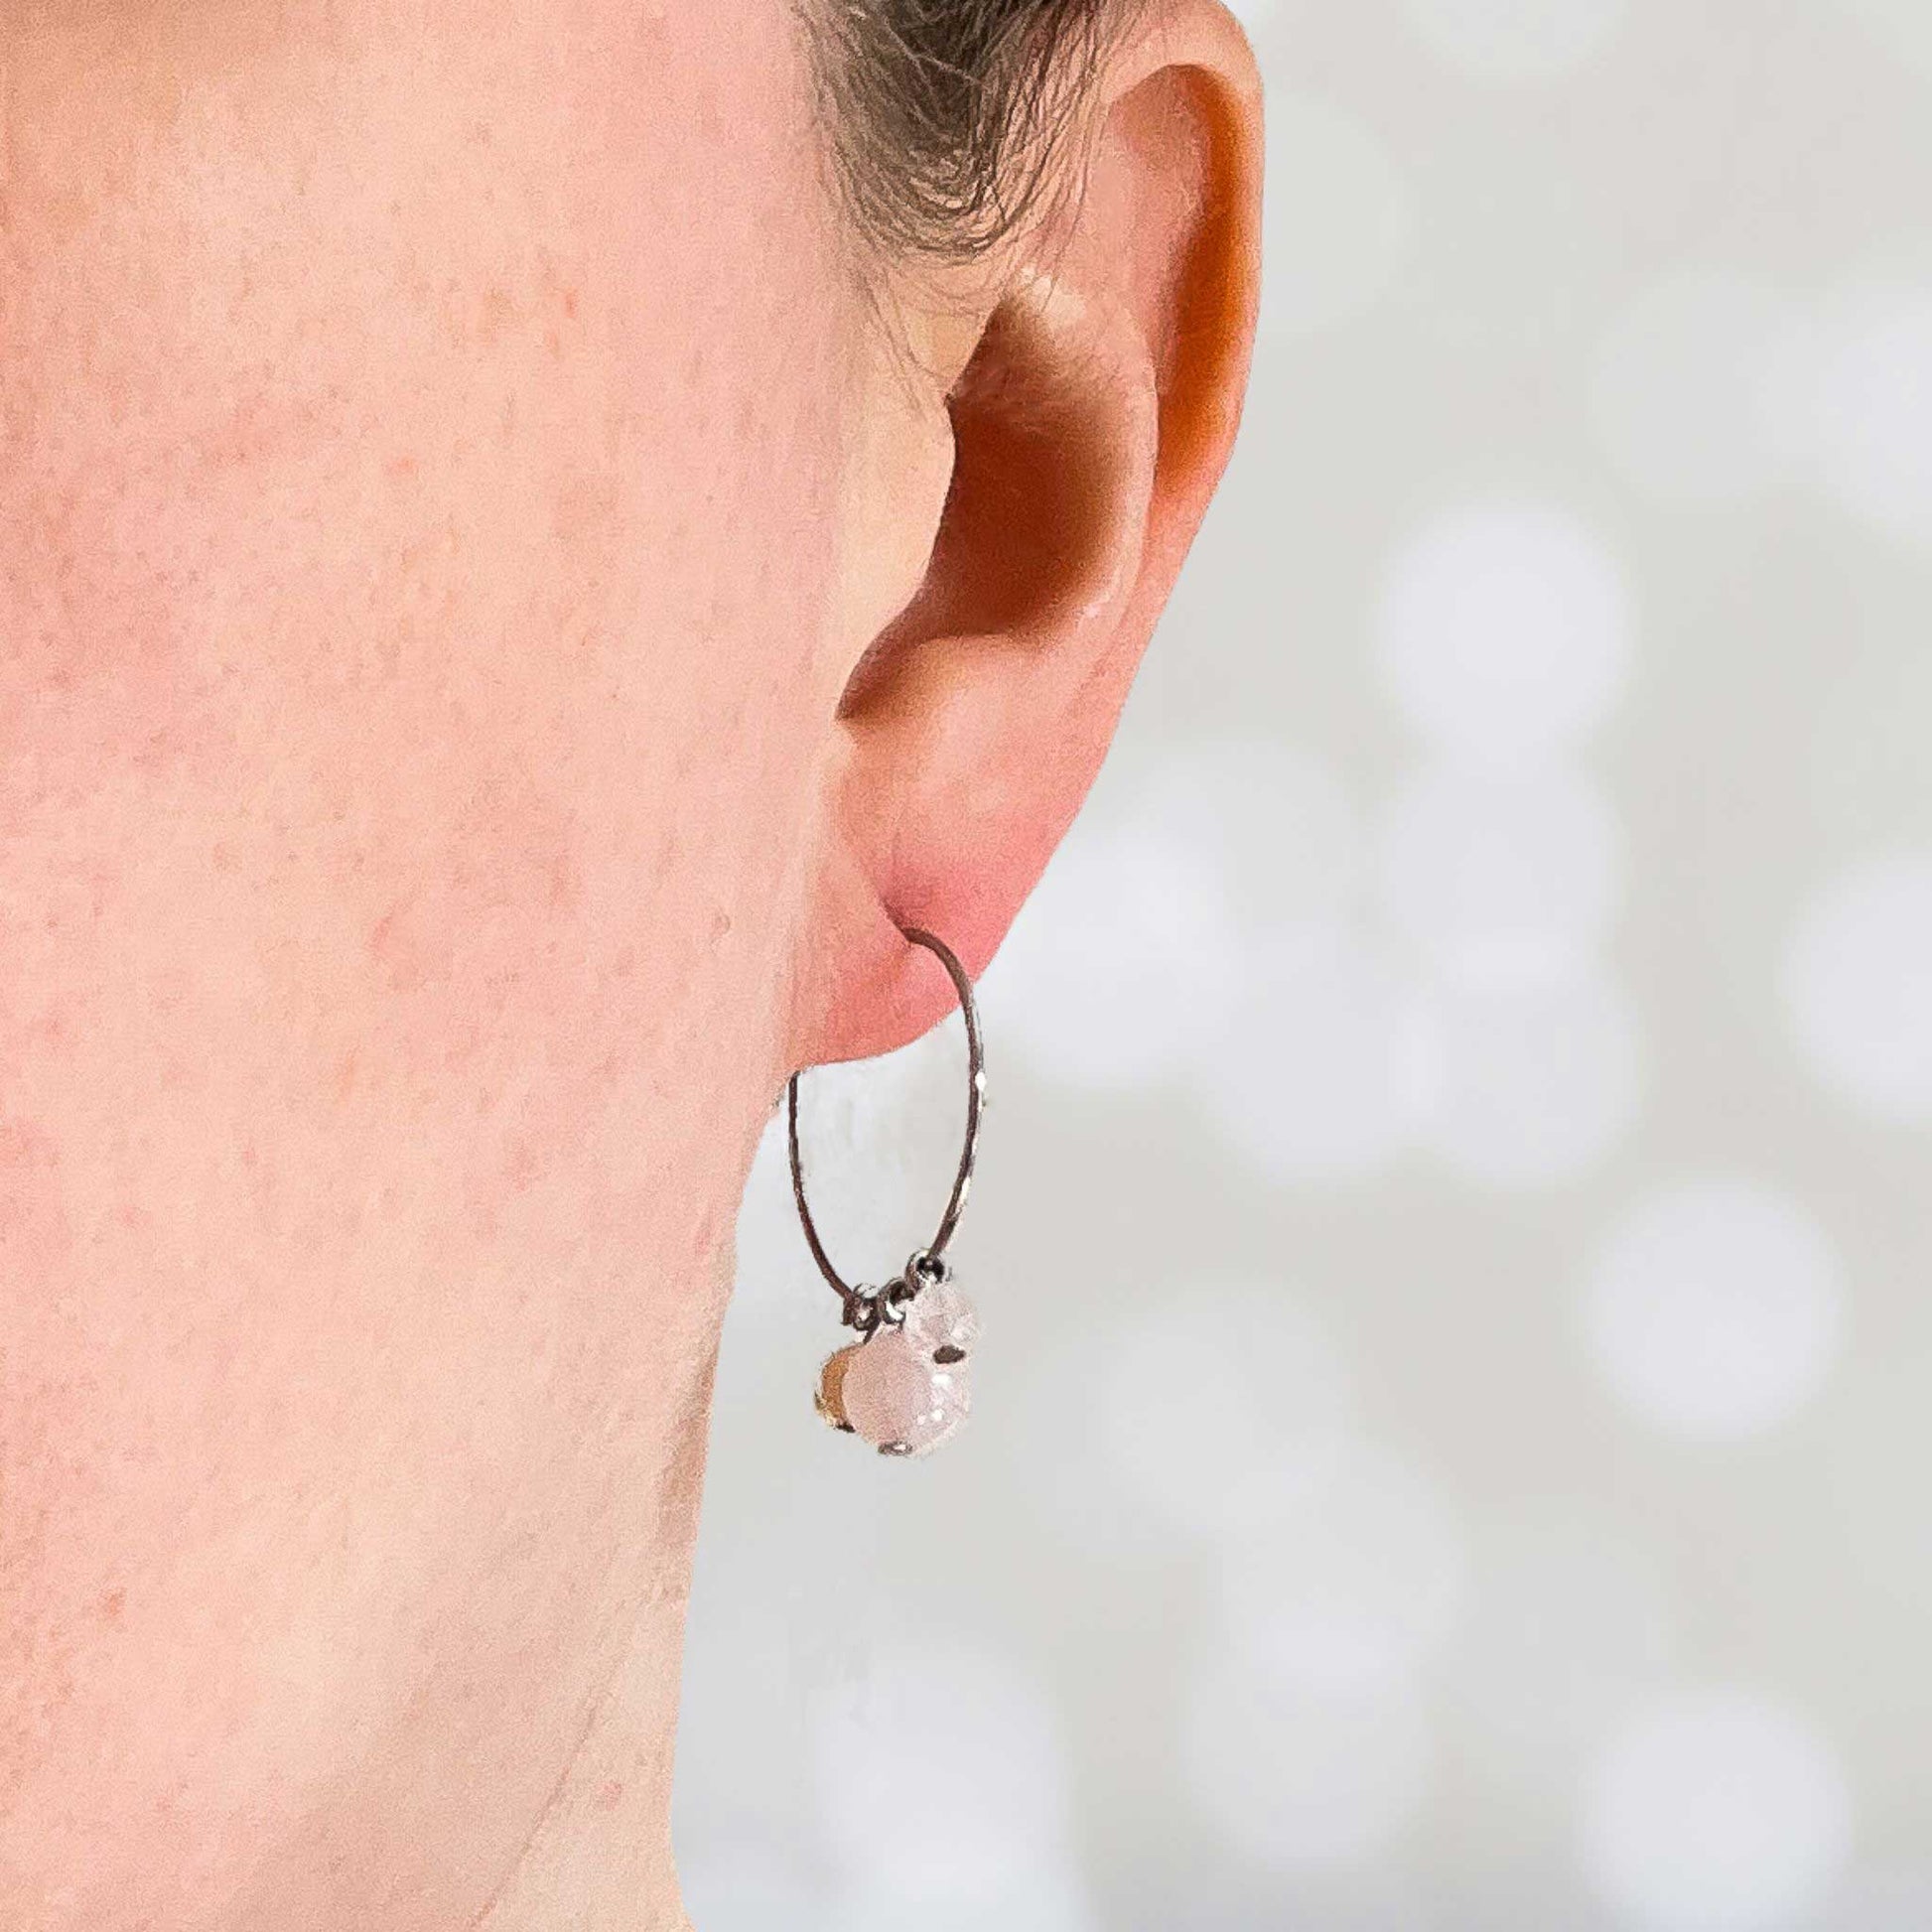 Woman wearing pale pink gemstone hoop earring in earlobe